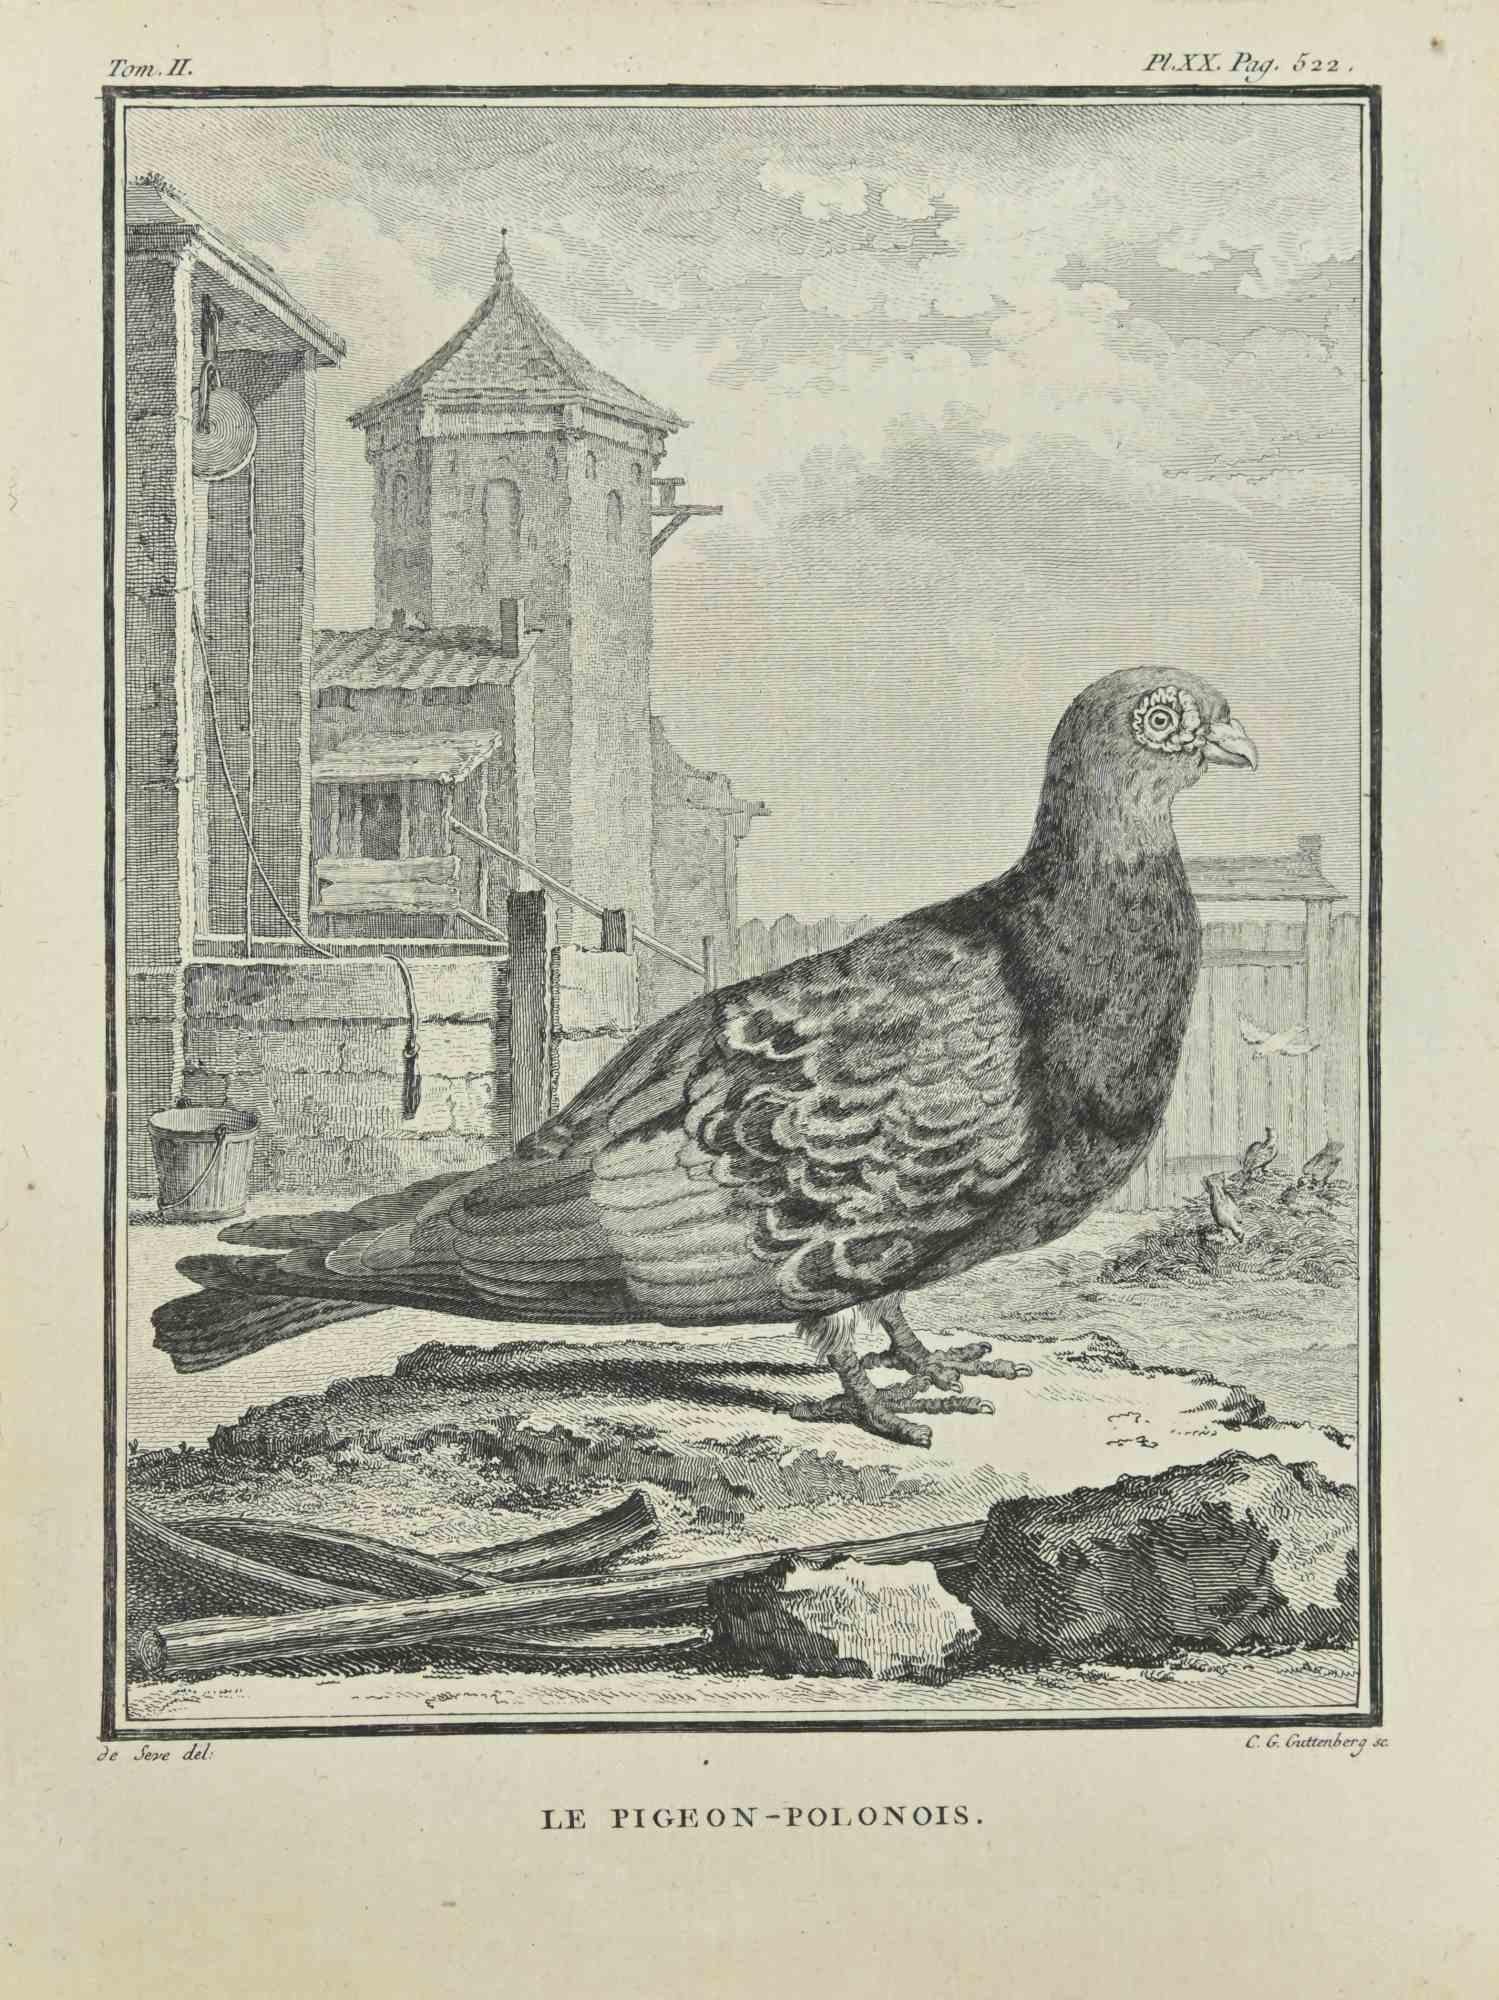 Carl Guttenberg Figurative Print - Le Pigeon - Polonois - Etching by Carl Guttenber - 1771